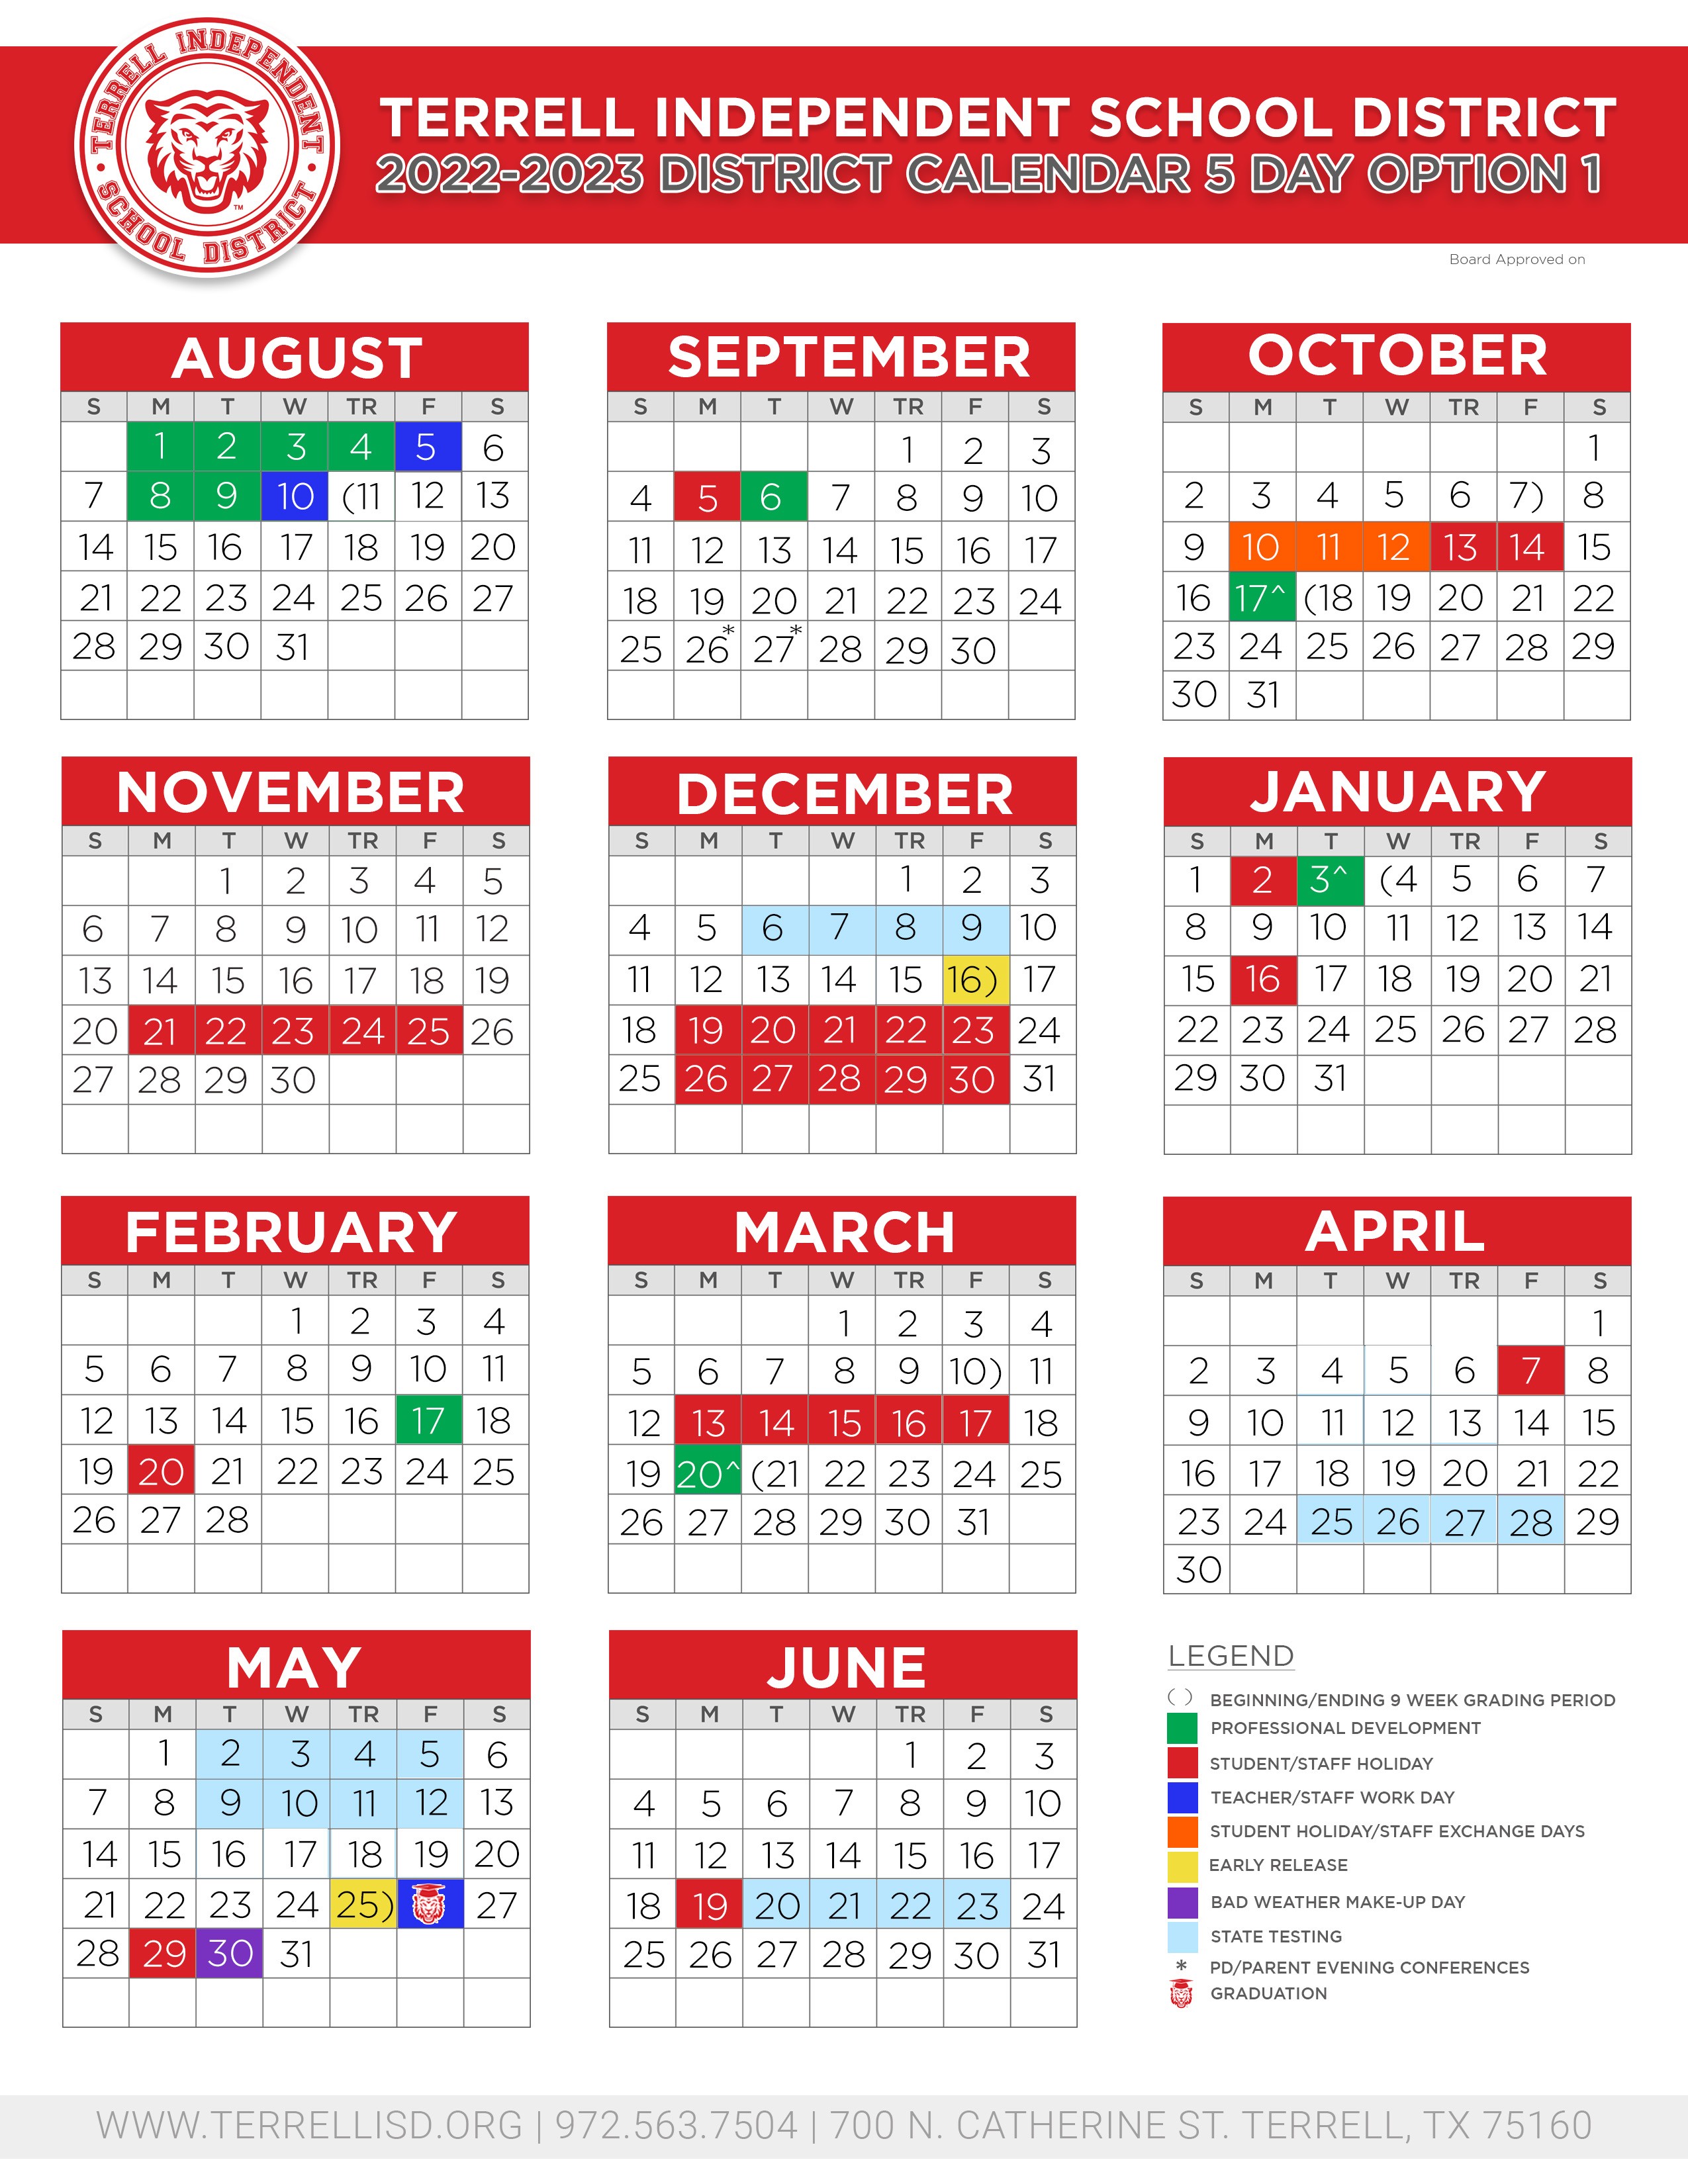 District Calendar